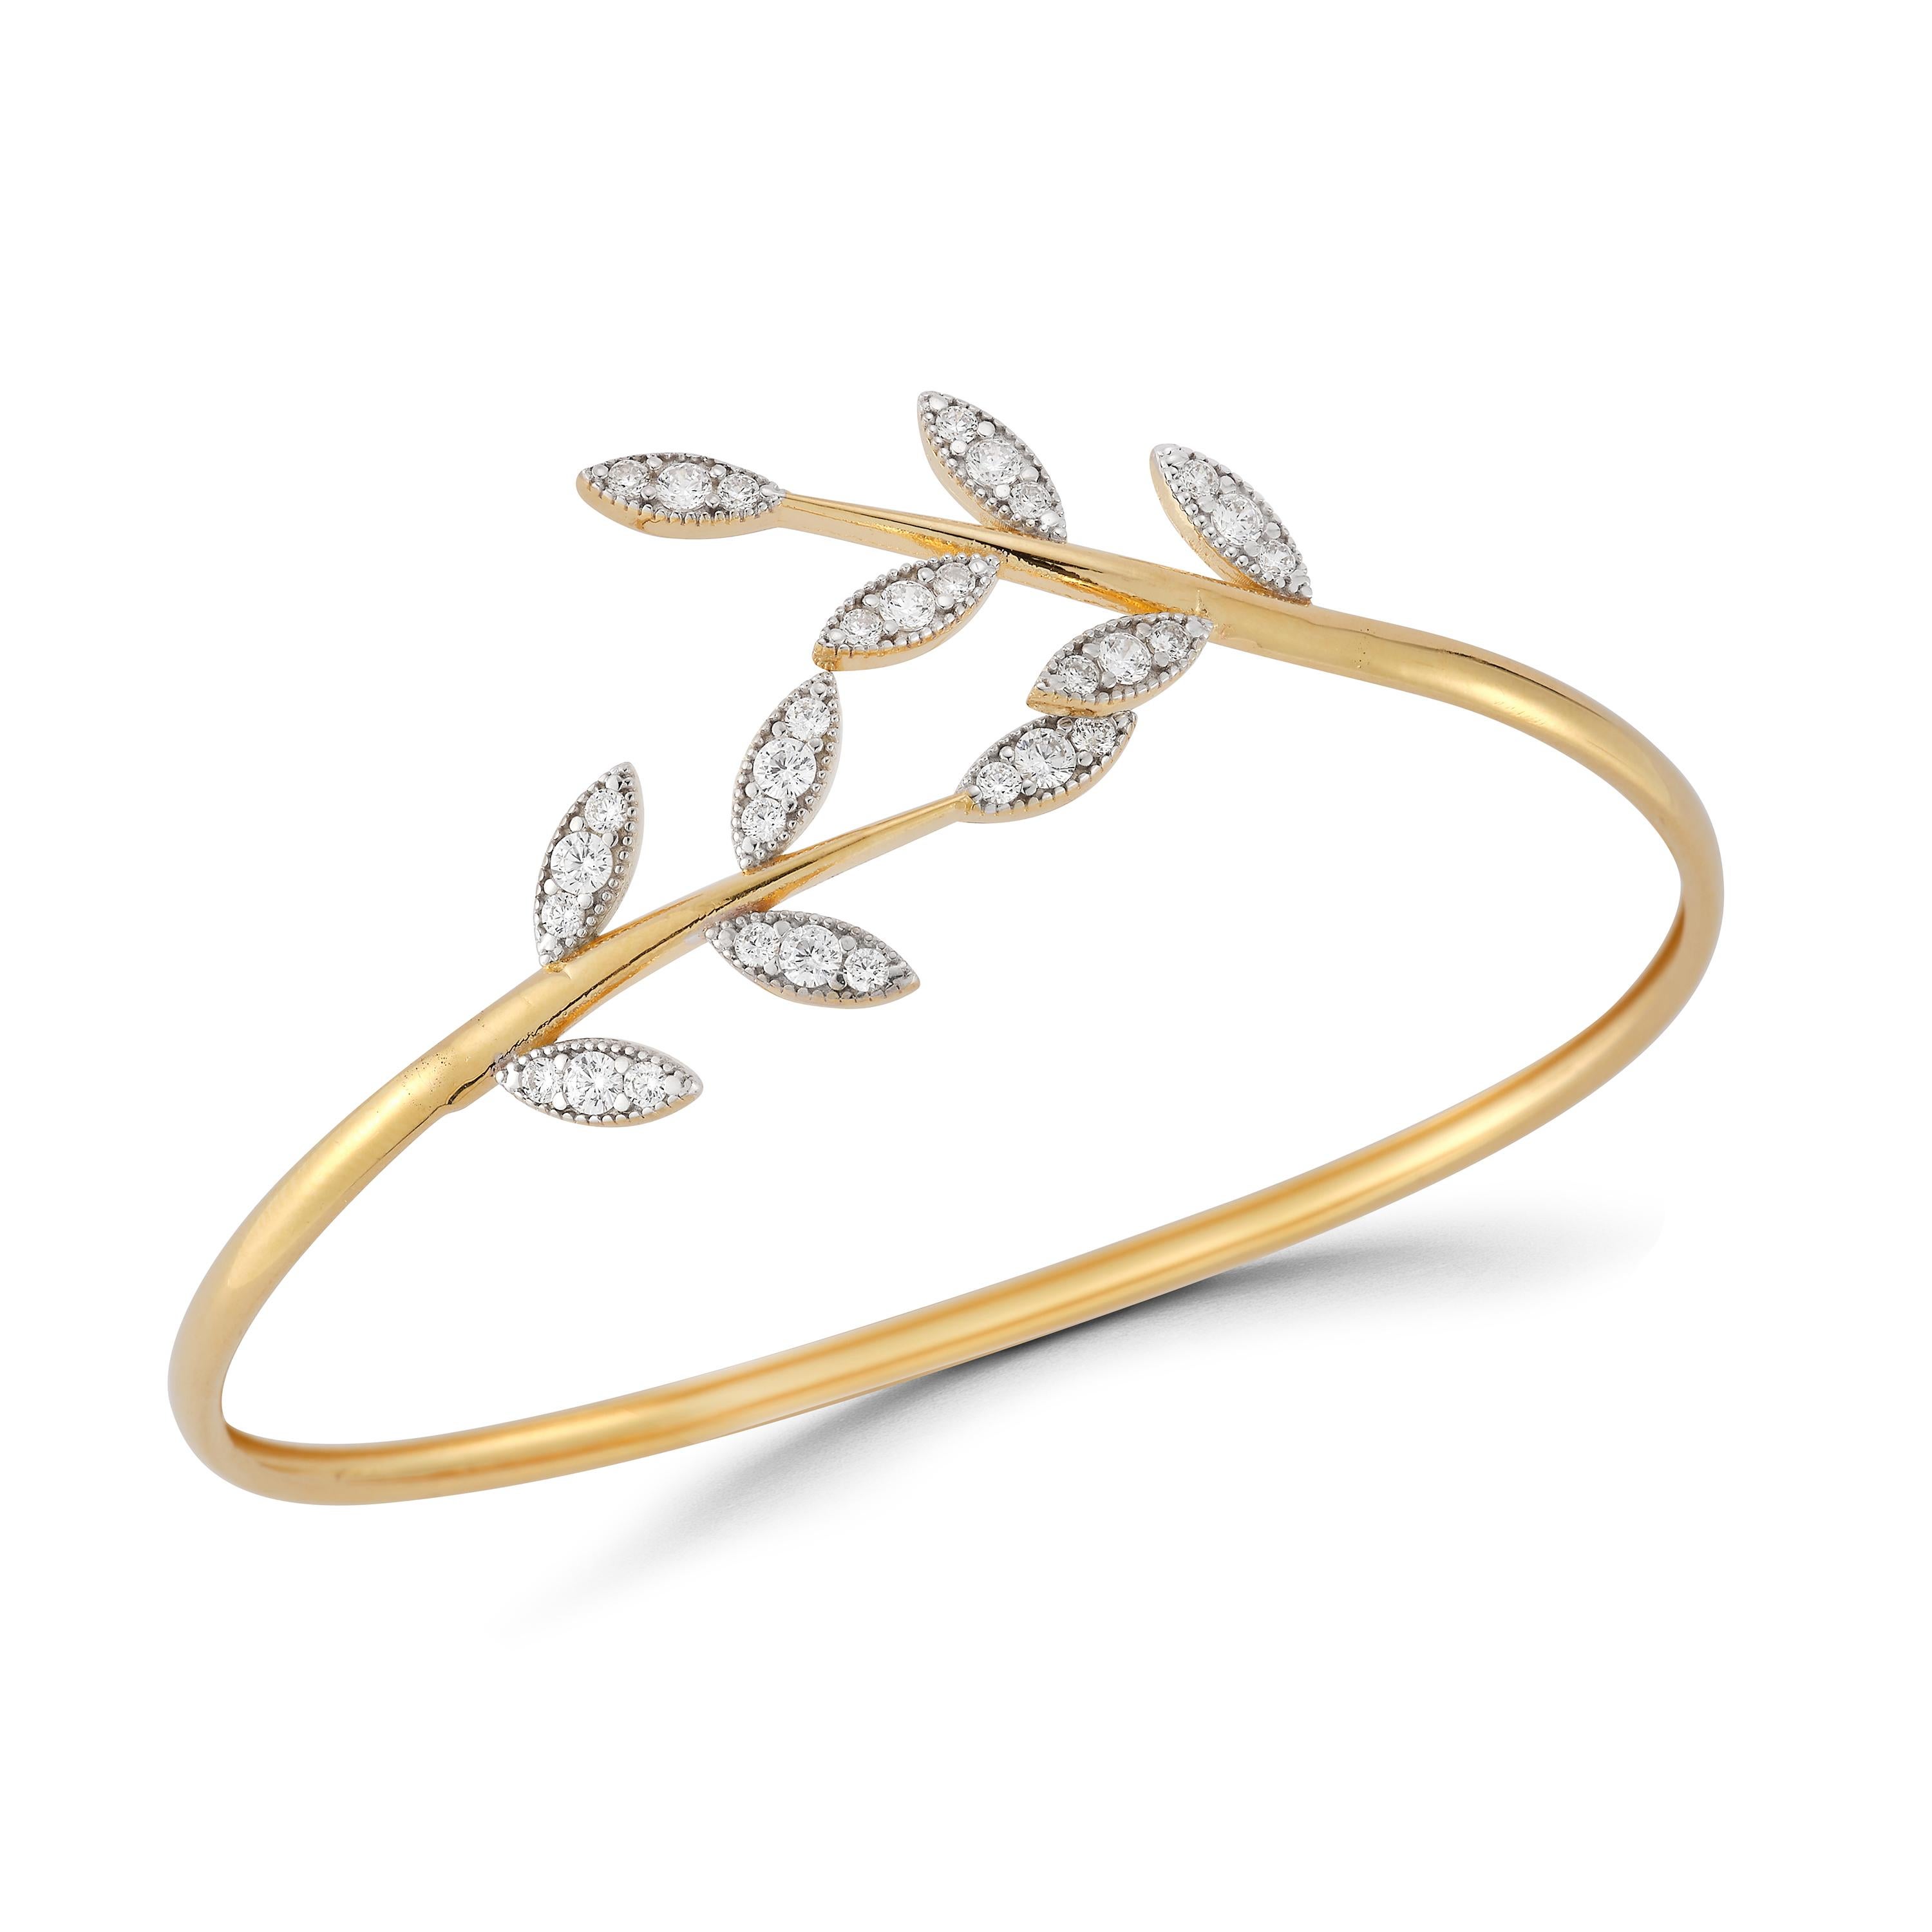 14 Karat Yellow Gold Hand-Crafted Satin-Finished Vine Leaf Bangle Bracelet, Enhanced with 1.00 Carat of Pave Set Diamonds.
